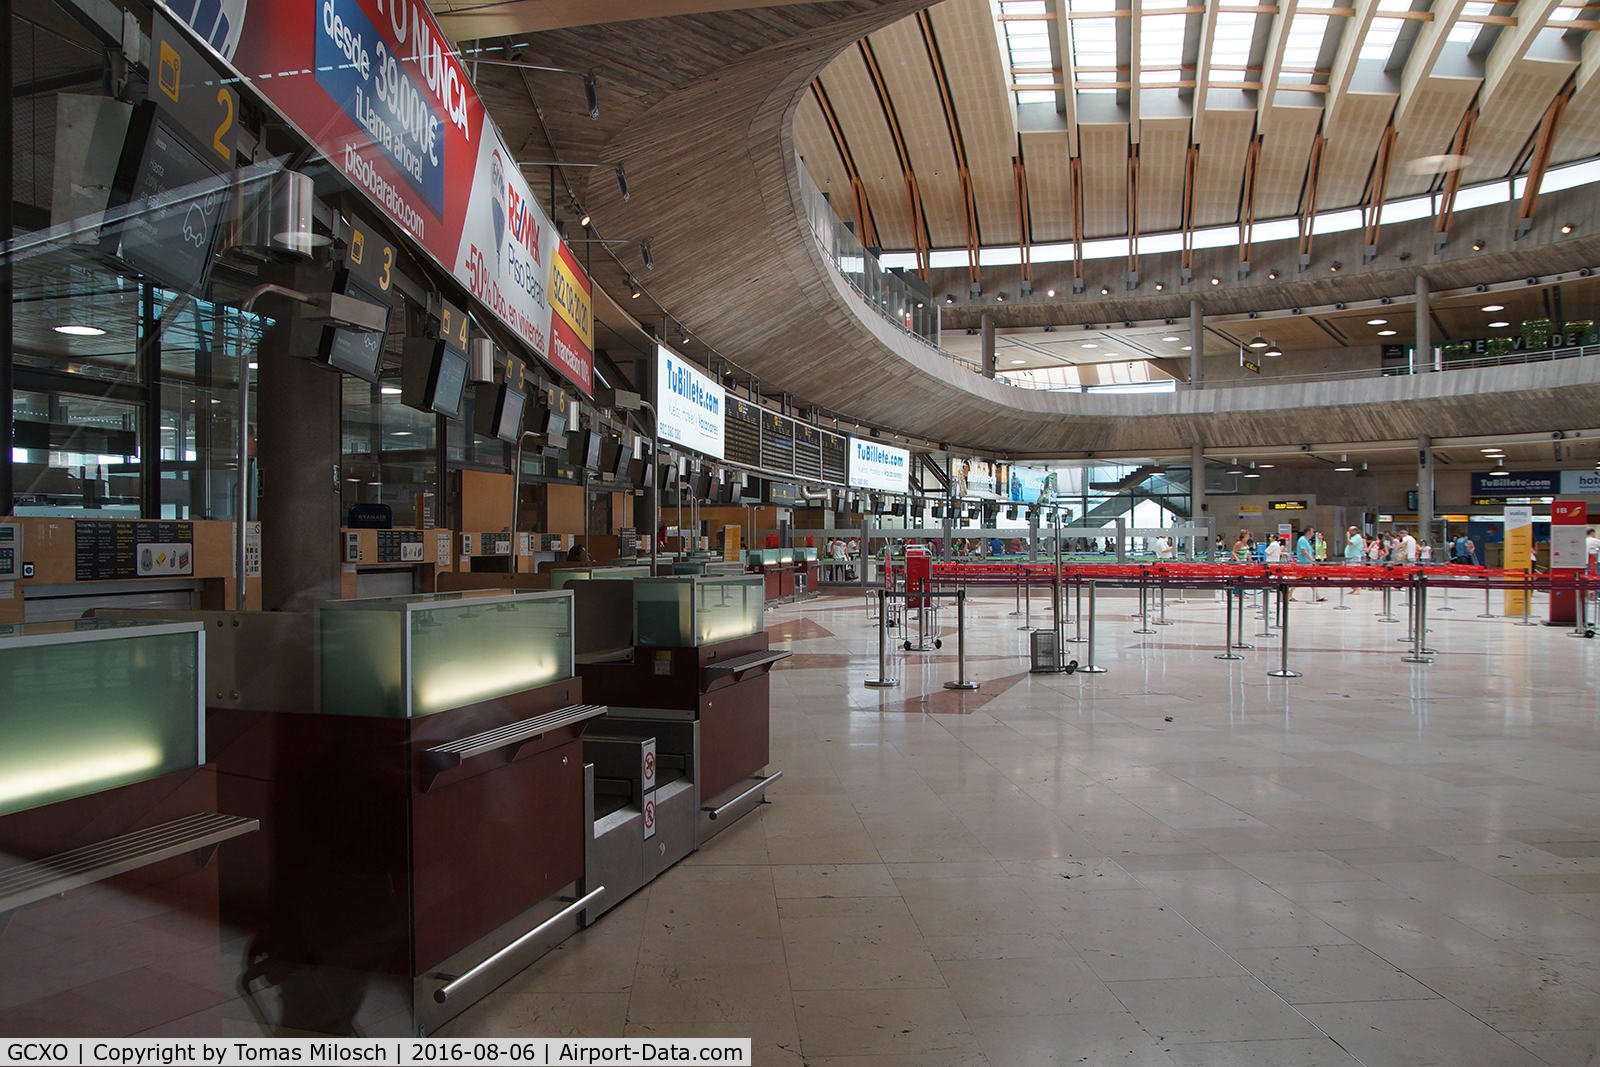 Tenerife North Airport (Los Rodeos), Tenerife Spain (GCXO) - Departure hall at TFN